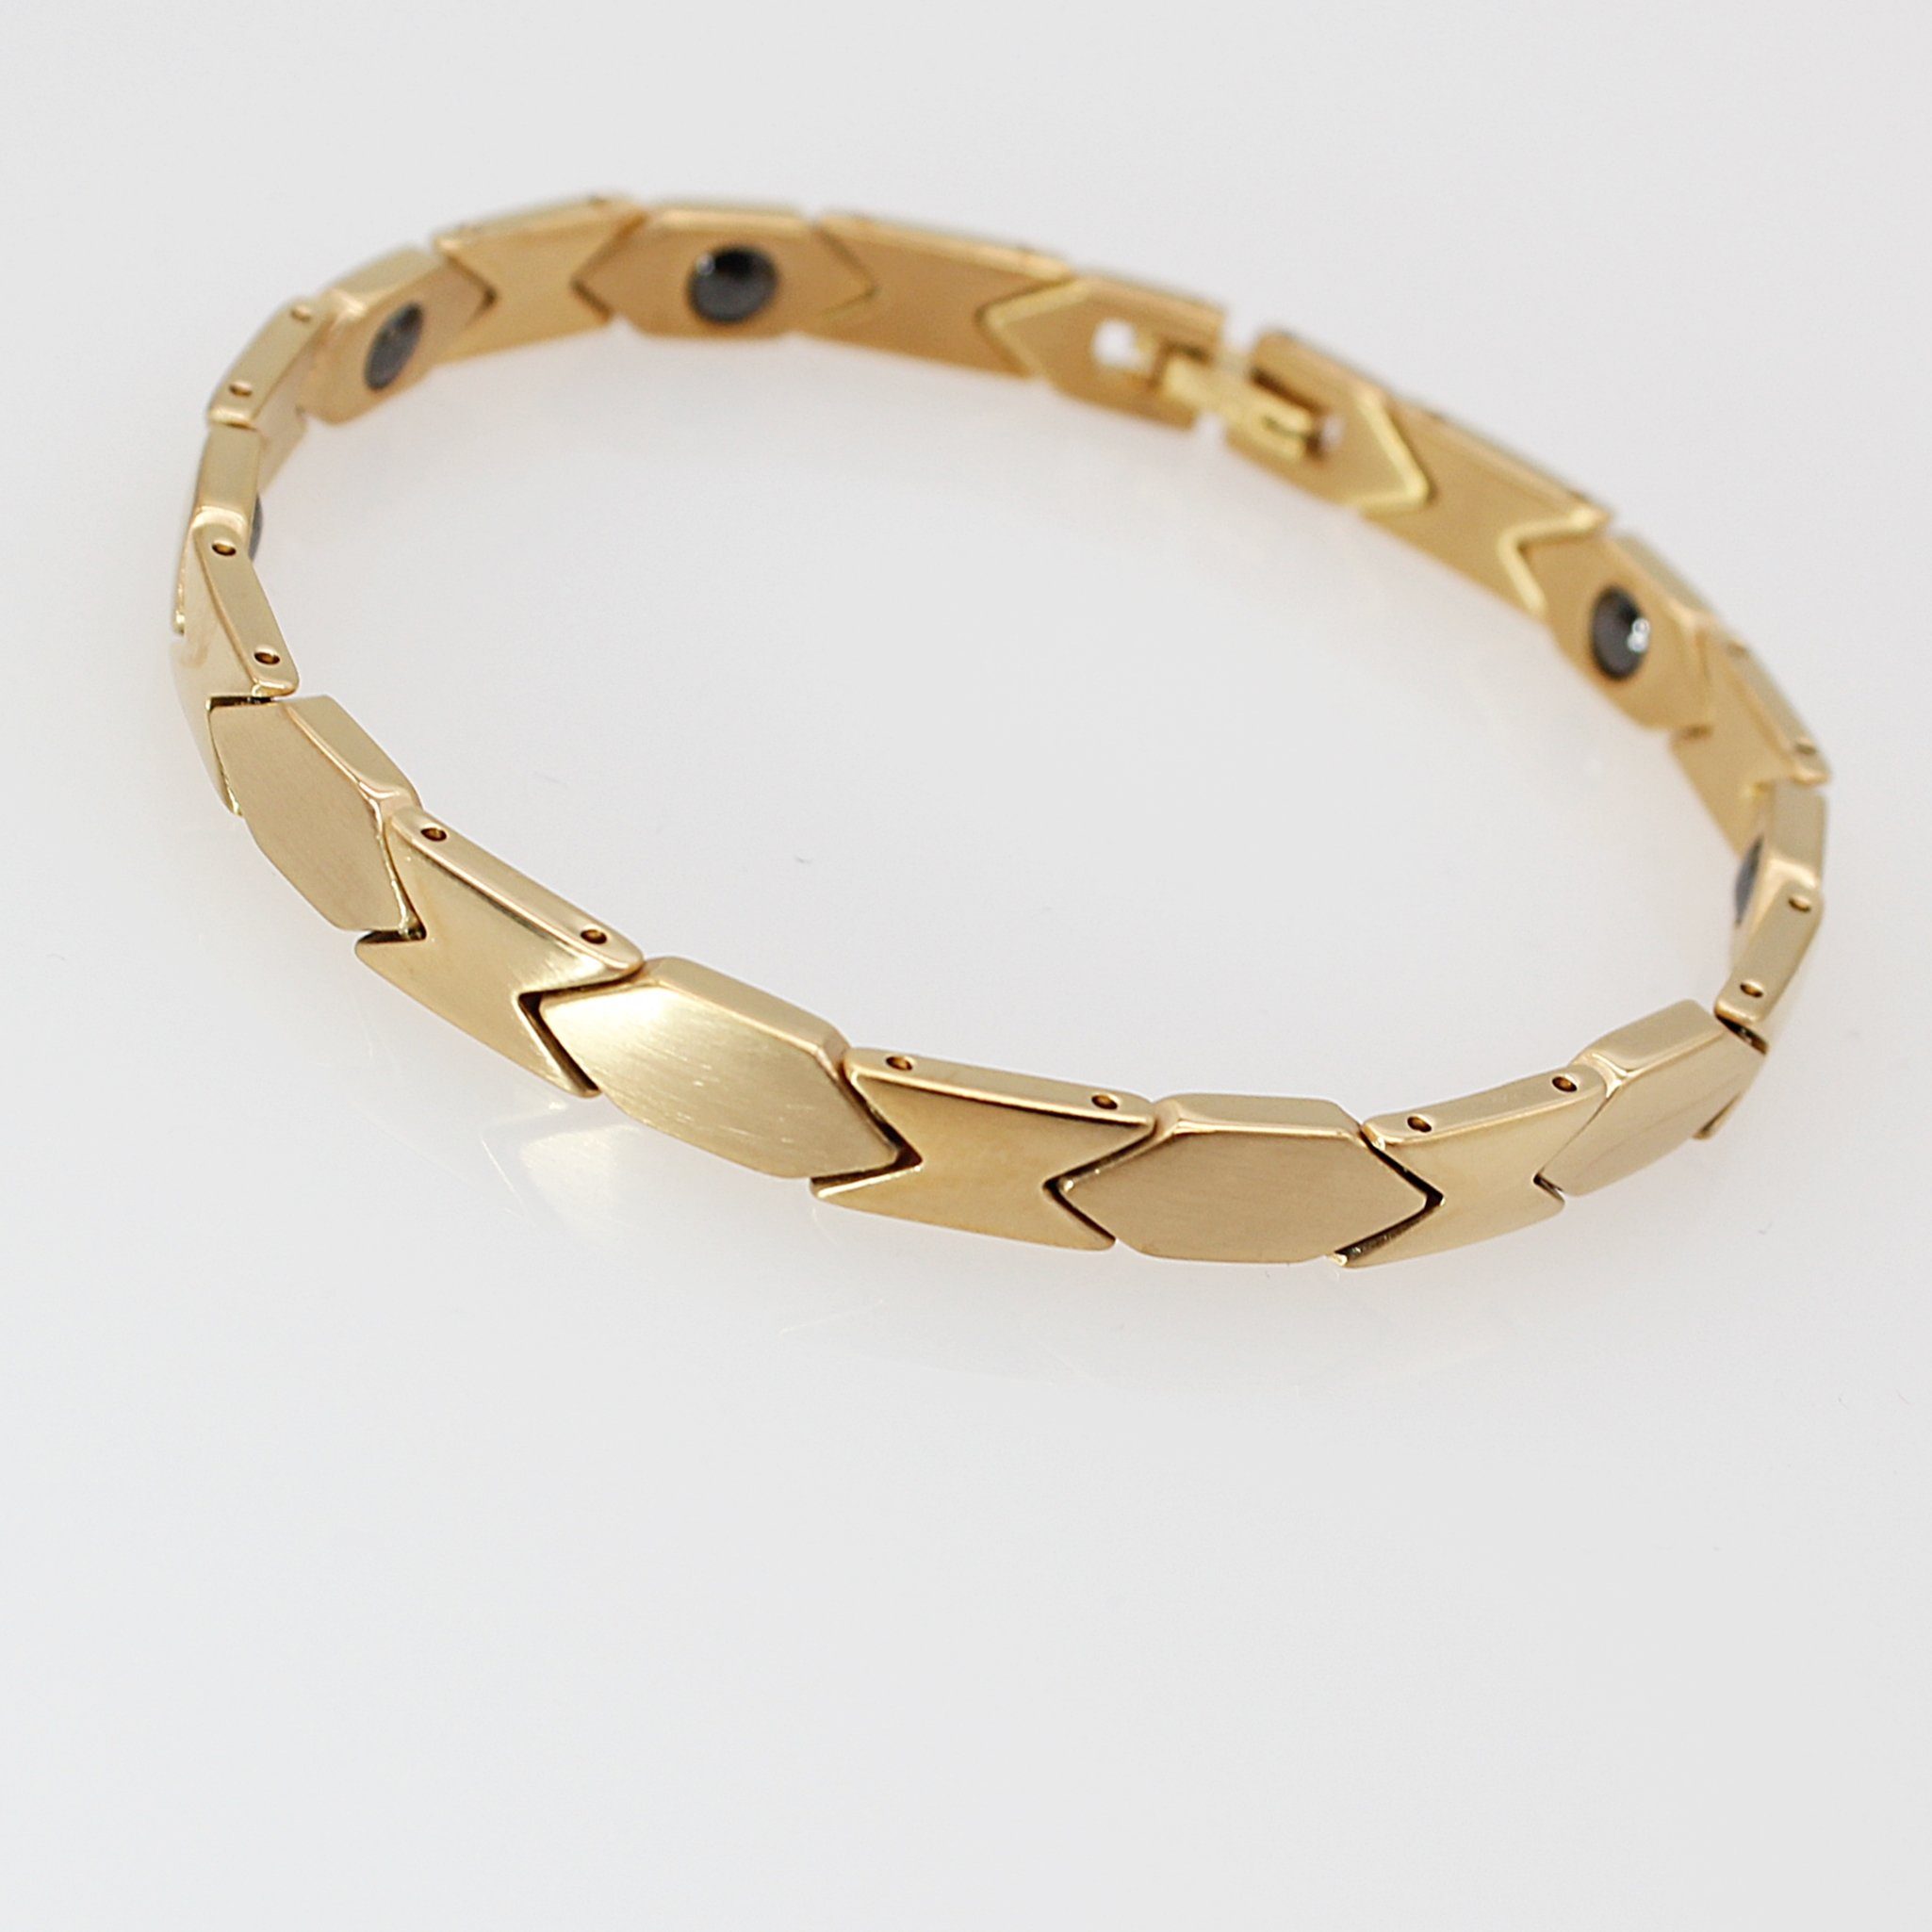 ELLAWIL Armband Edelstahlarmband Gliederarmband Edelstahl- Magnetarmband Damenarmband (aus Goldfarbenen Edelstahl, Armbandlänge 20 cm, Breite 6 mm), inklusive Geschenkschachtel